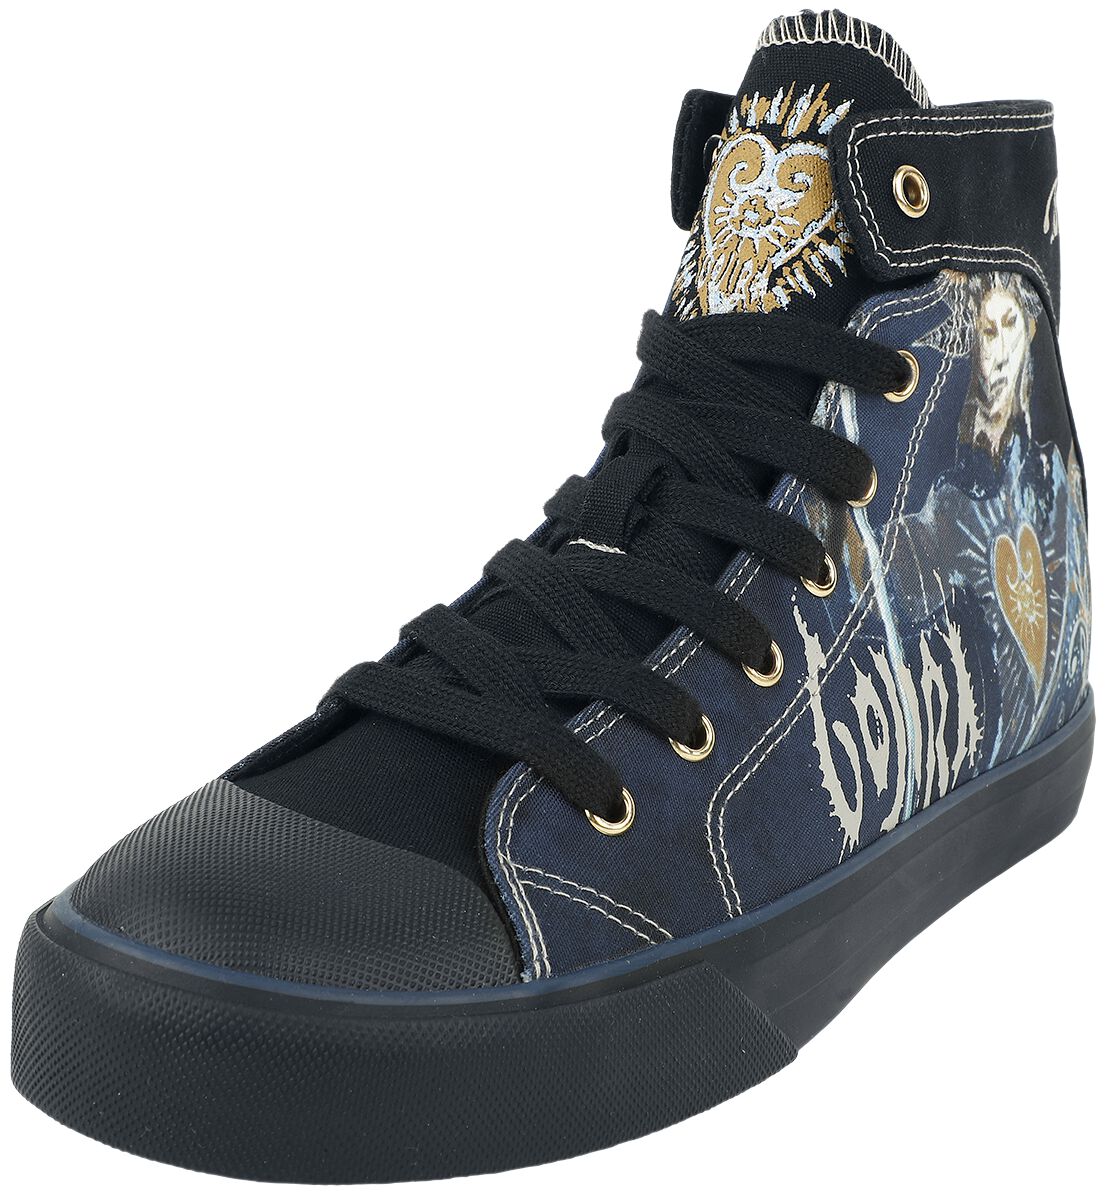 Gojira Sneaker high - EMP Signature Collection - EU38 bis EU39 - Größe EU38 - multicolor  - EMP exklusives Merchandise!